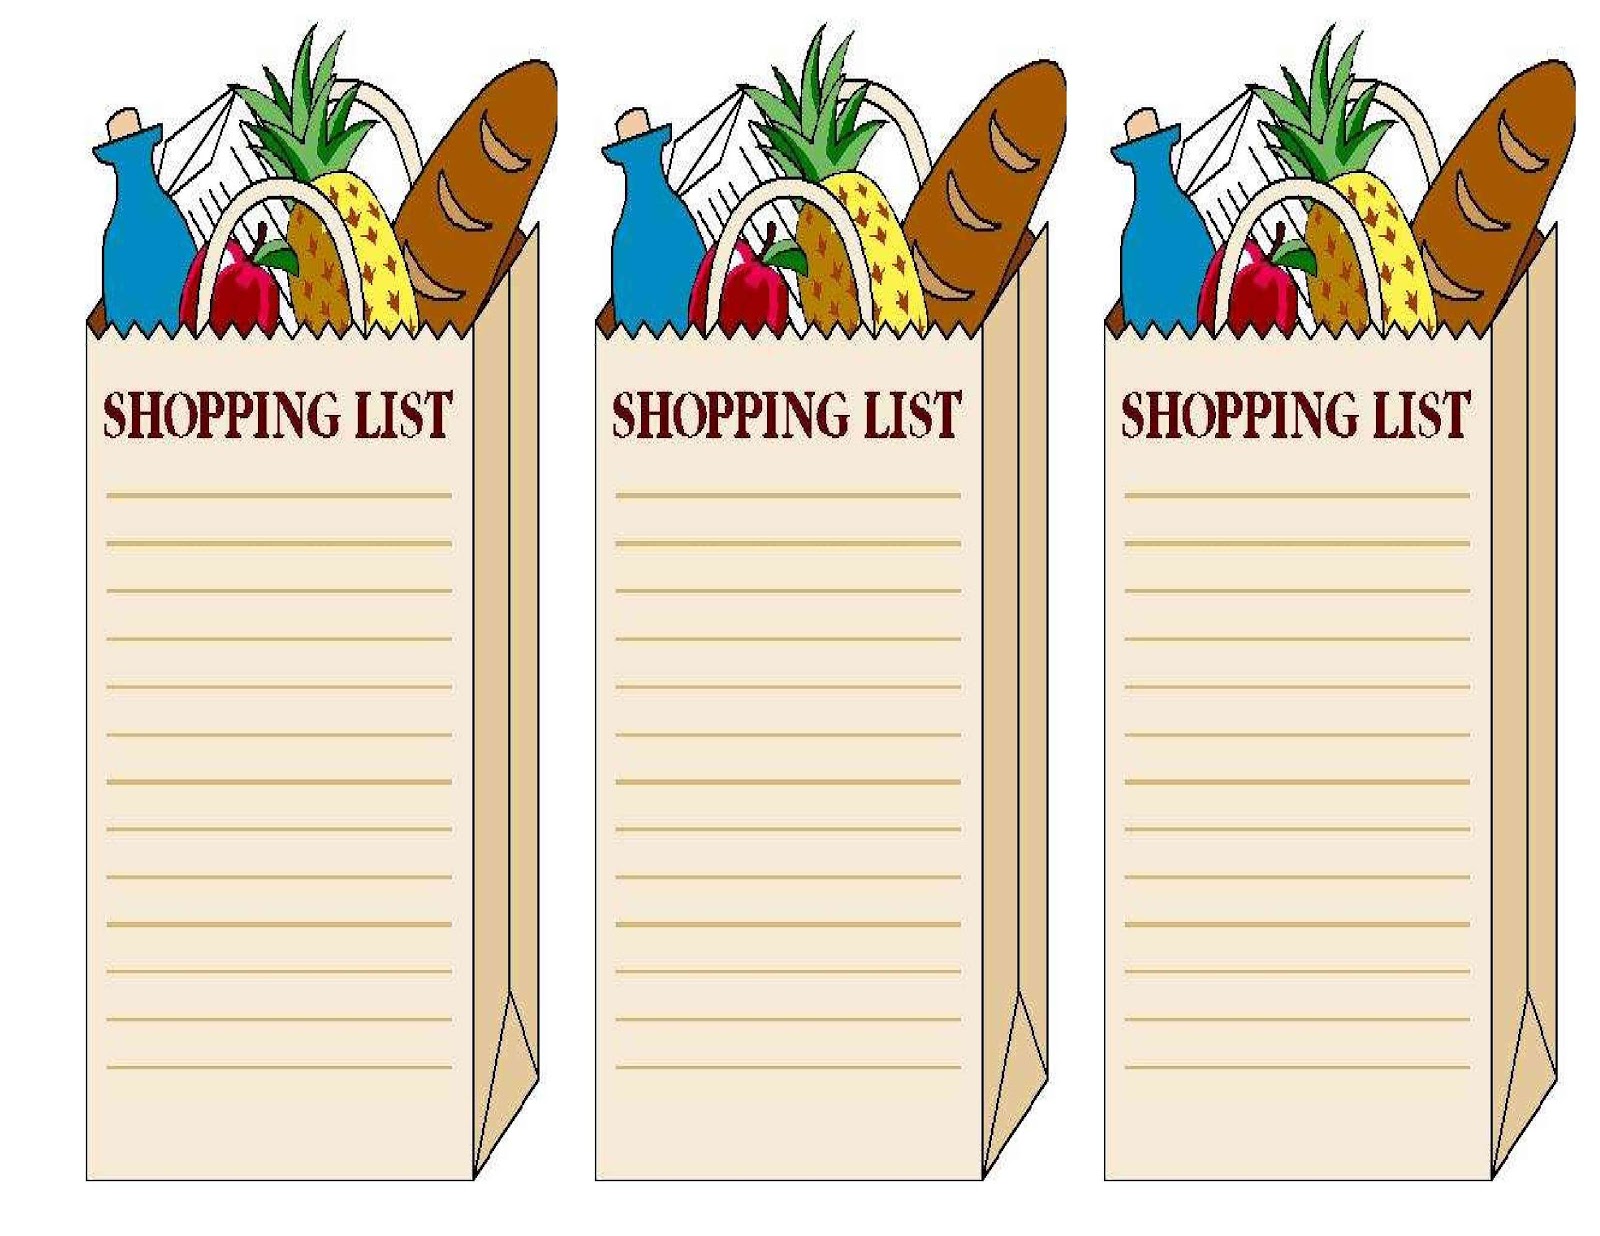 Making a shopping list. Список покупок на английском. Shopping list. Список продуктов шаблон. Список покупок шаблон для детей.